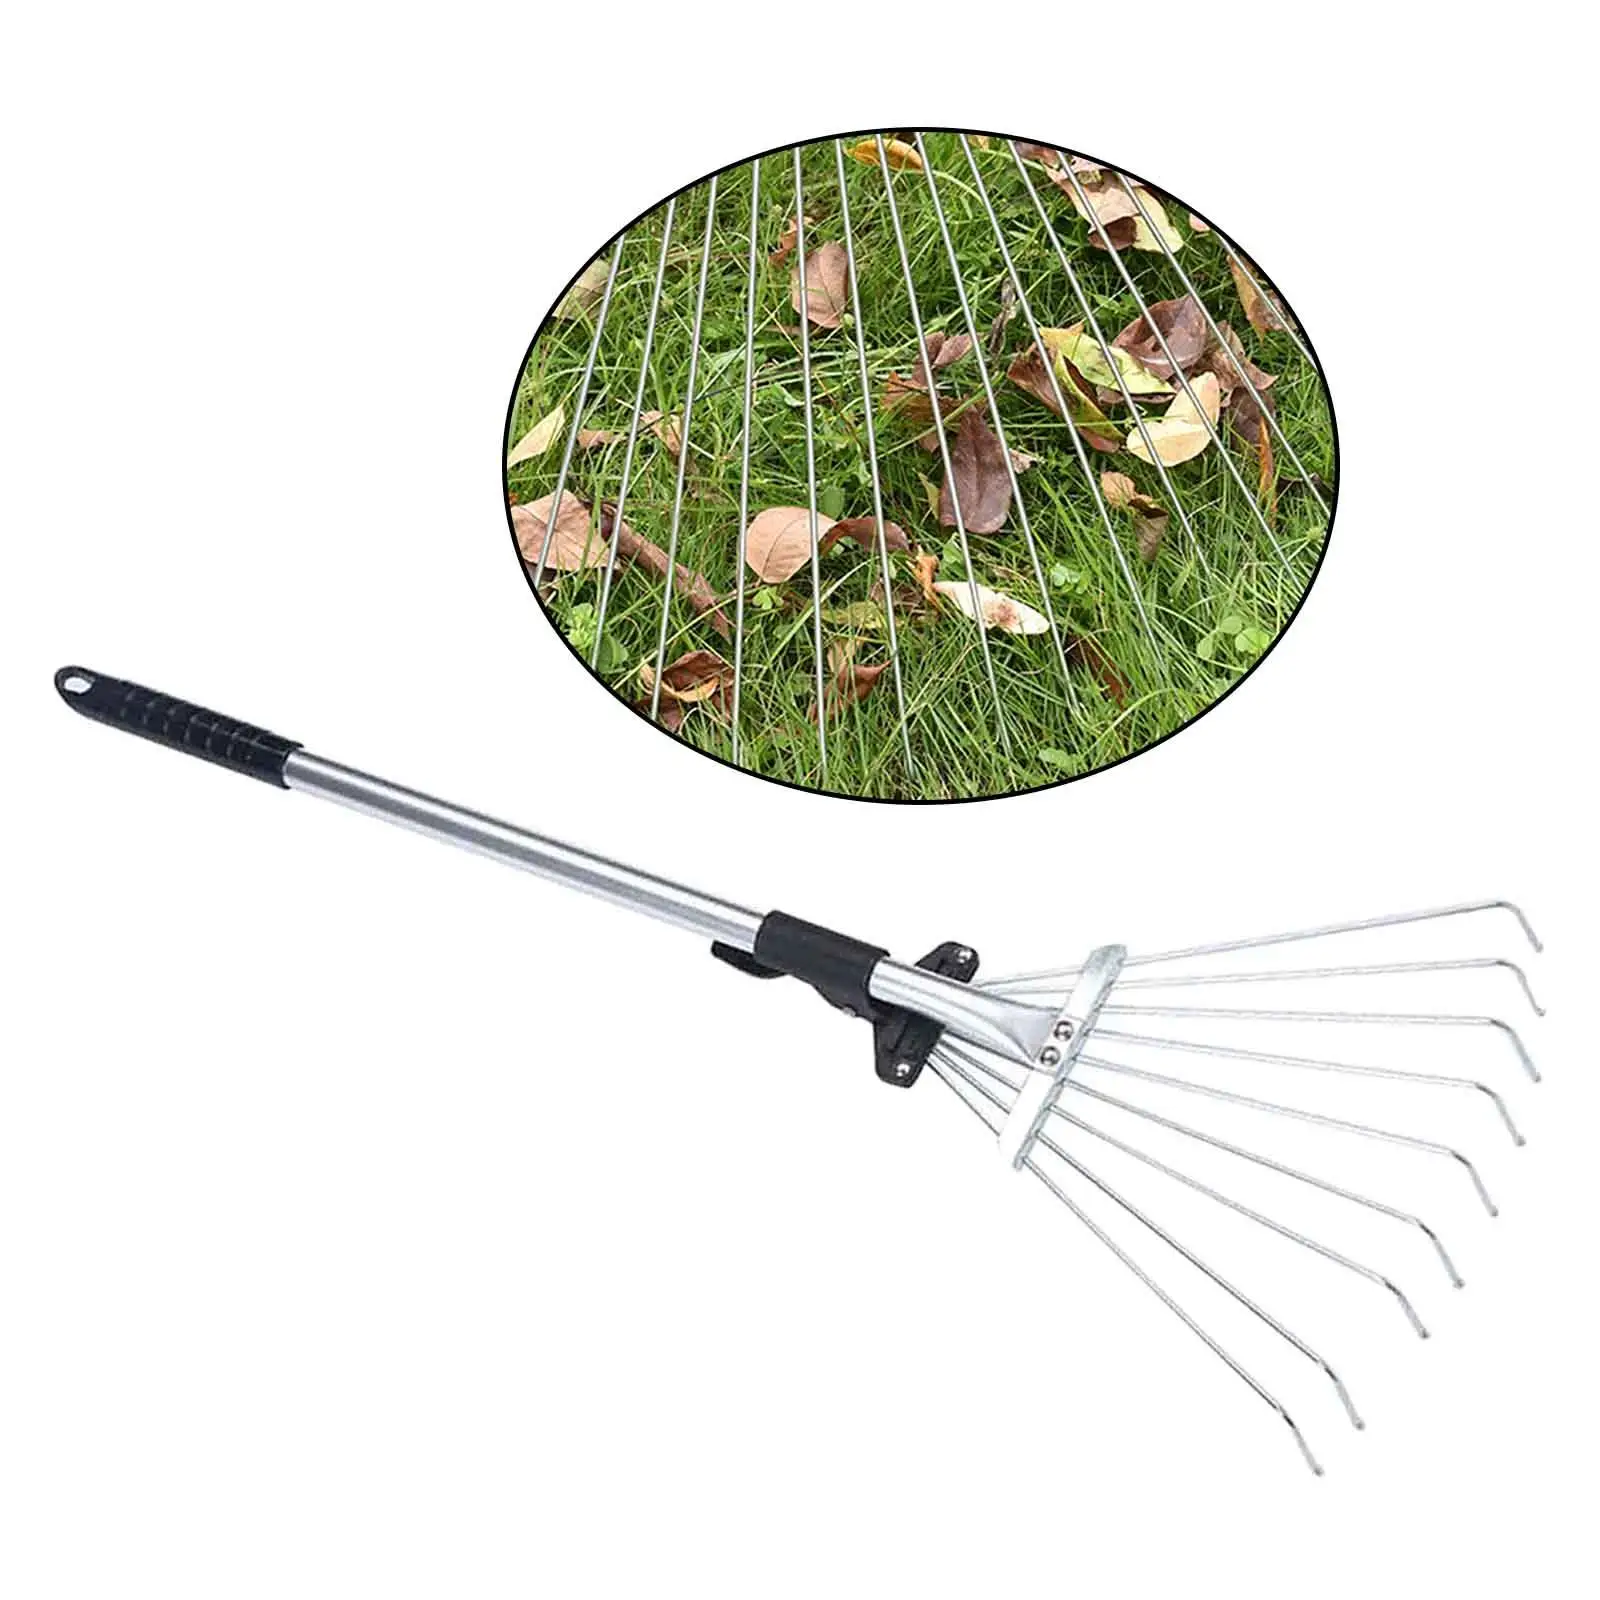 Telescopic Garden Leaf Rake Lightweight Adjustable for Plants Lawns Camping